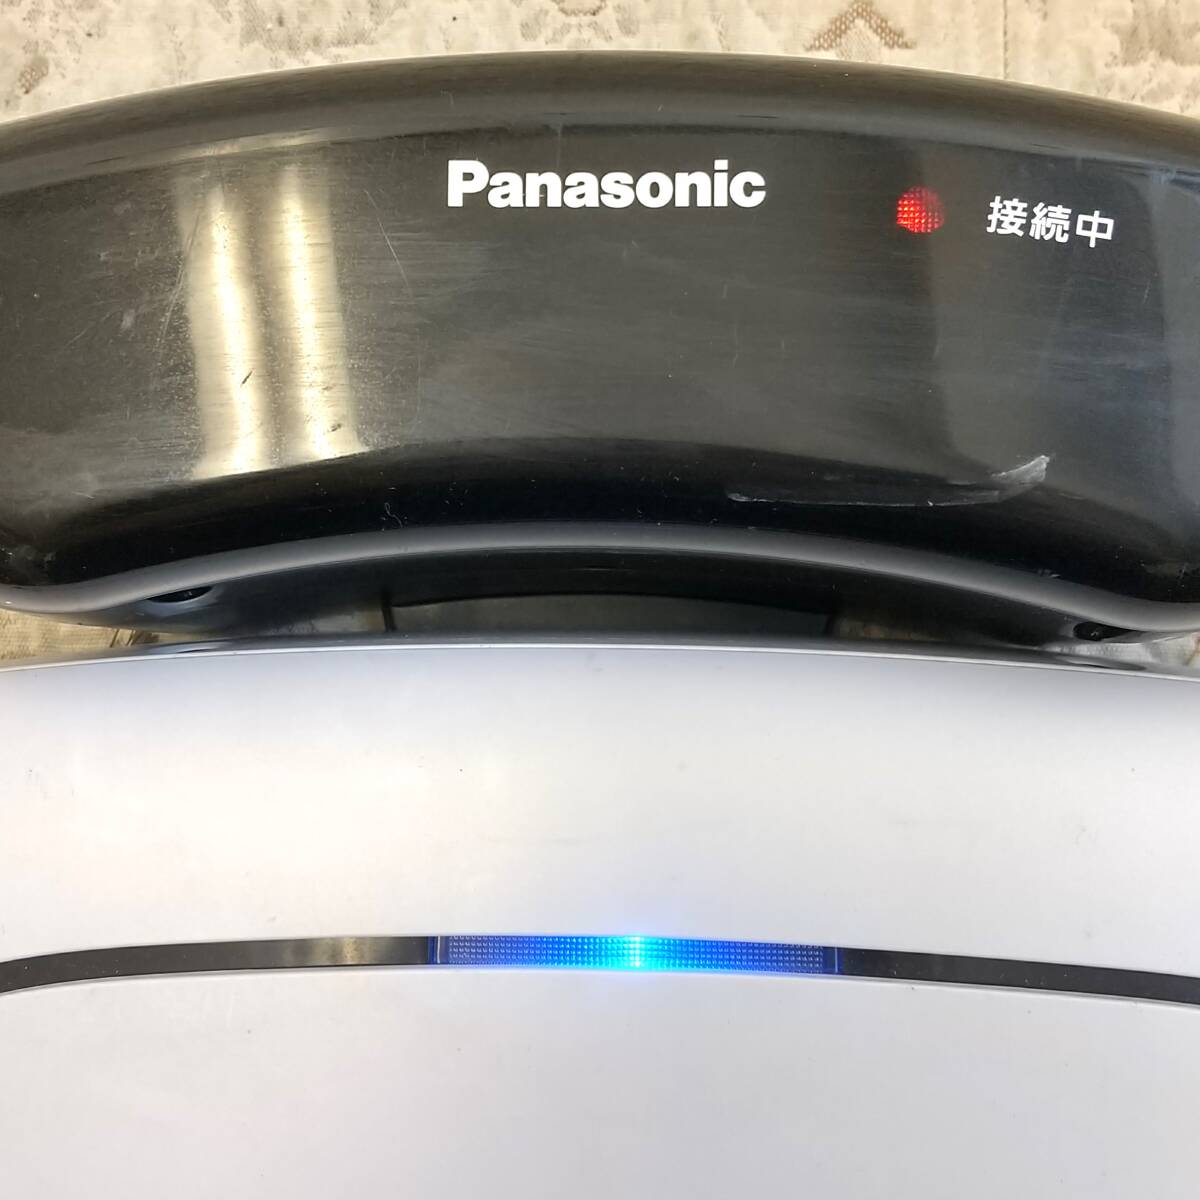 [769] junk 2020 year made Panasonic robot vacuum cleaner MC-RSF1000-W